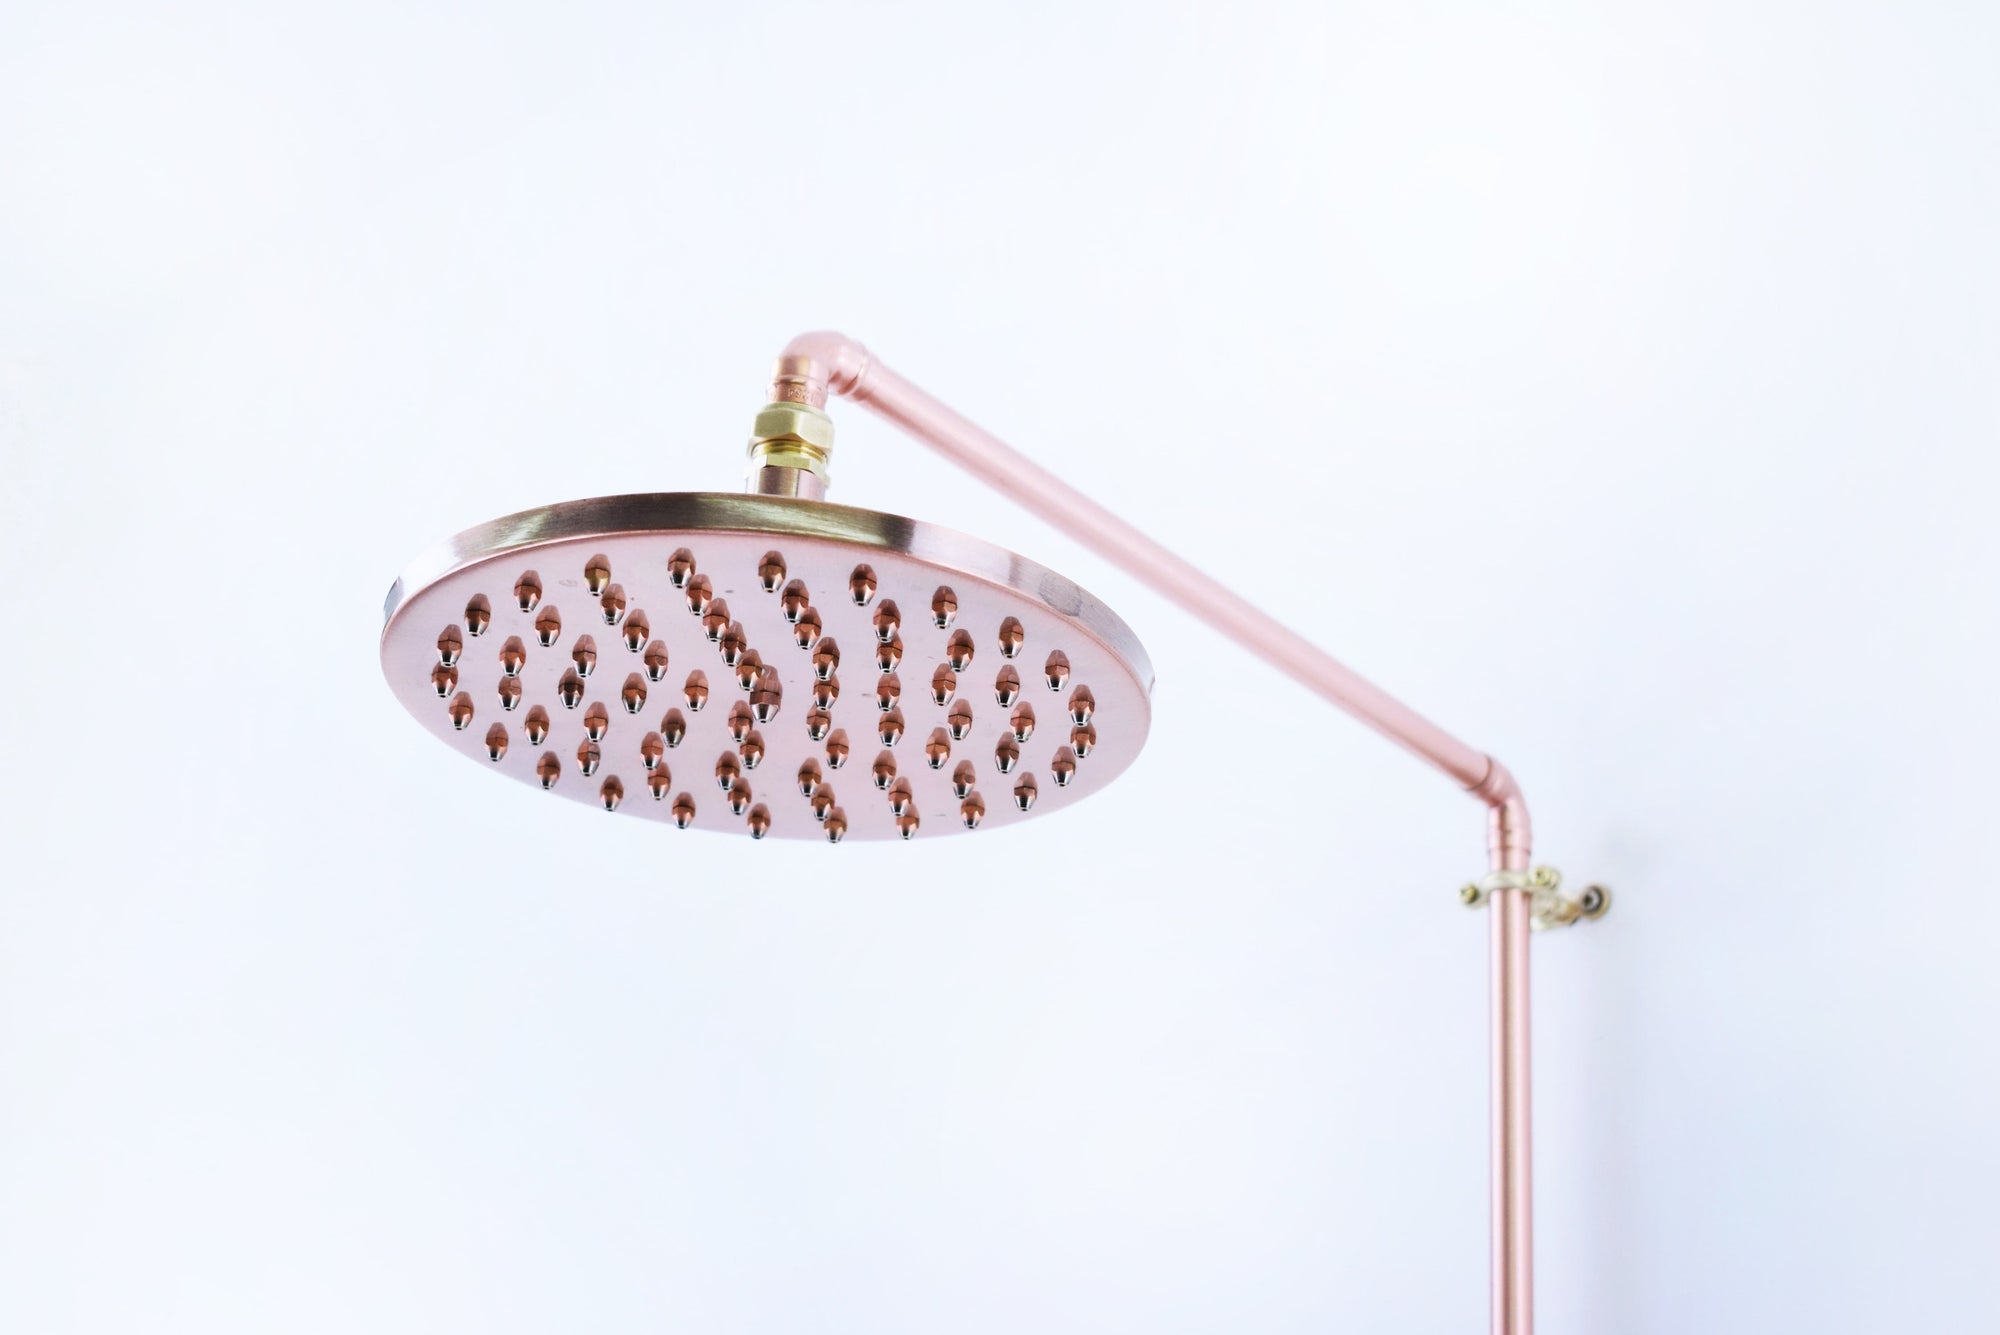 Copper Shower - Tinago - Proper Copper Design